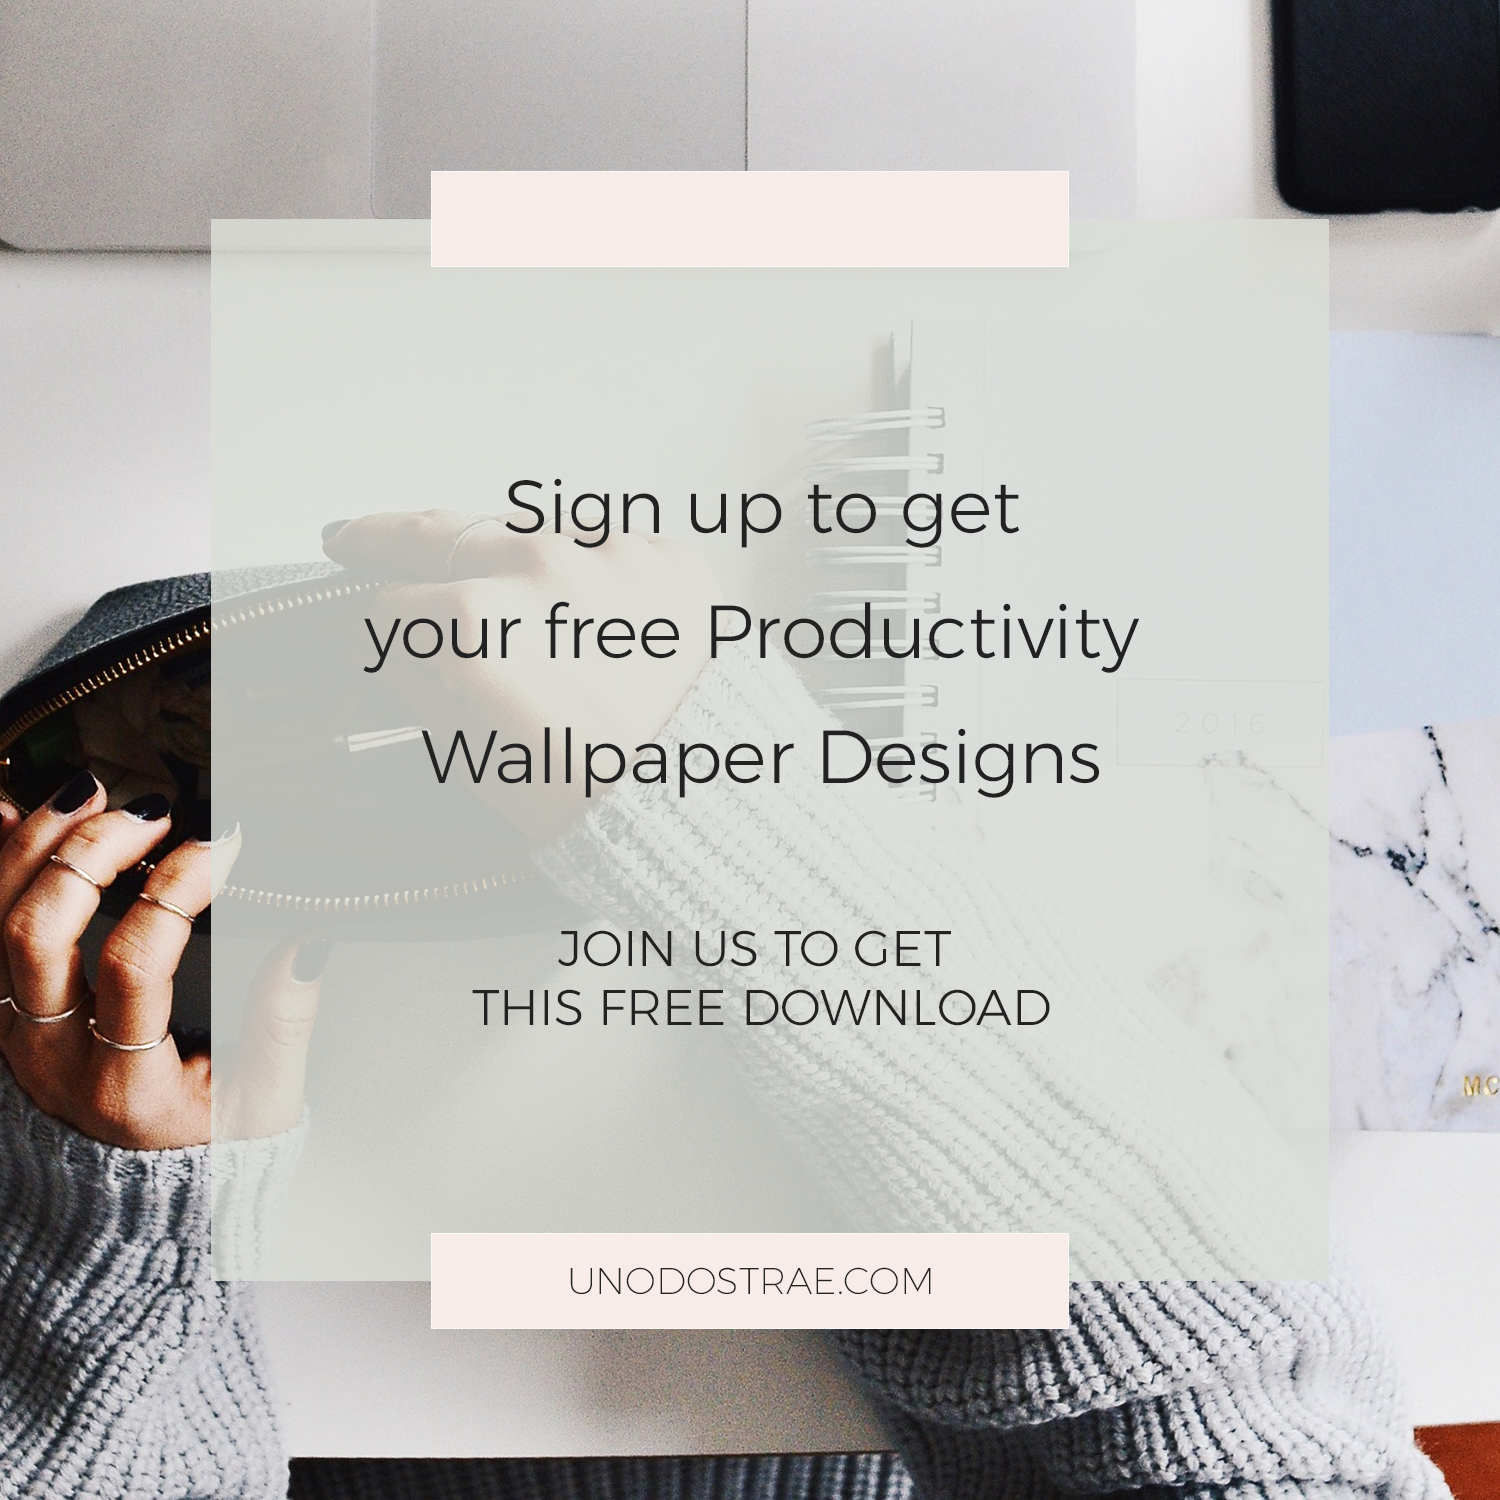 Free productivity wallpaper designs for entrepreneurs!